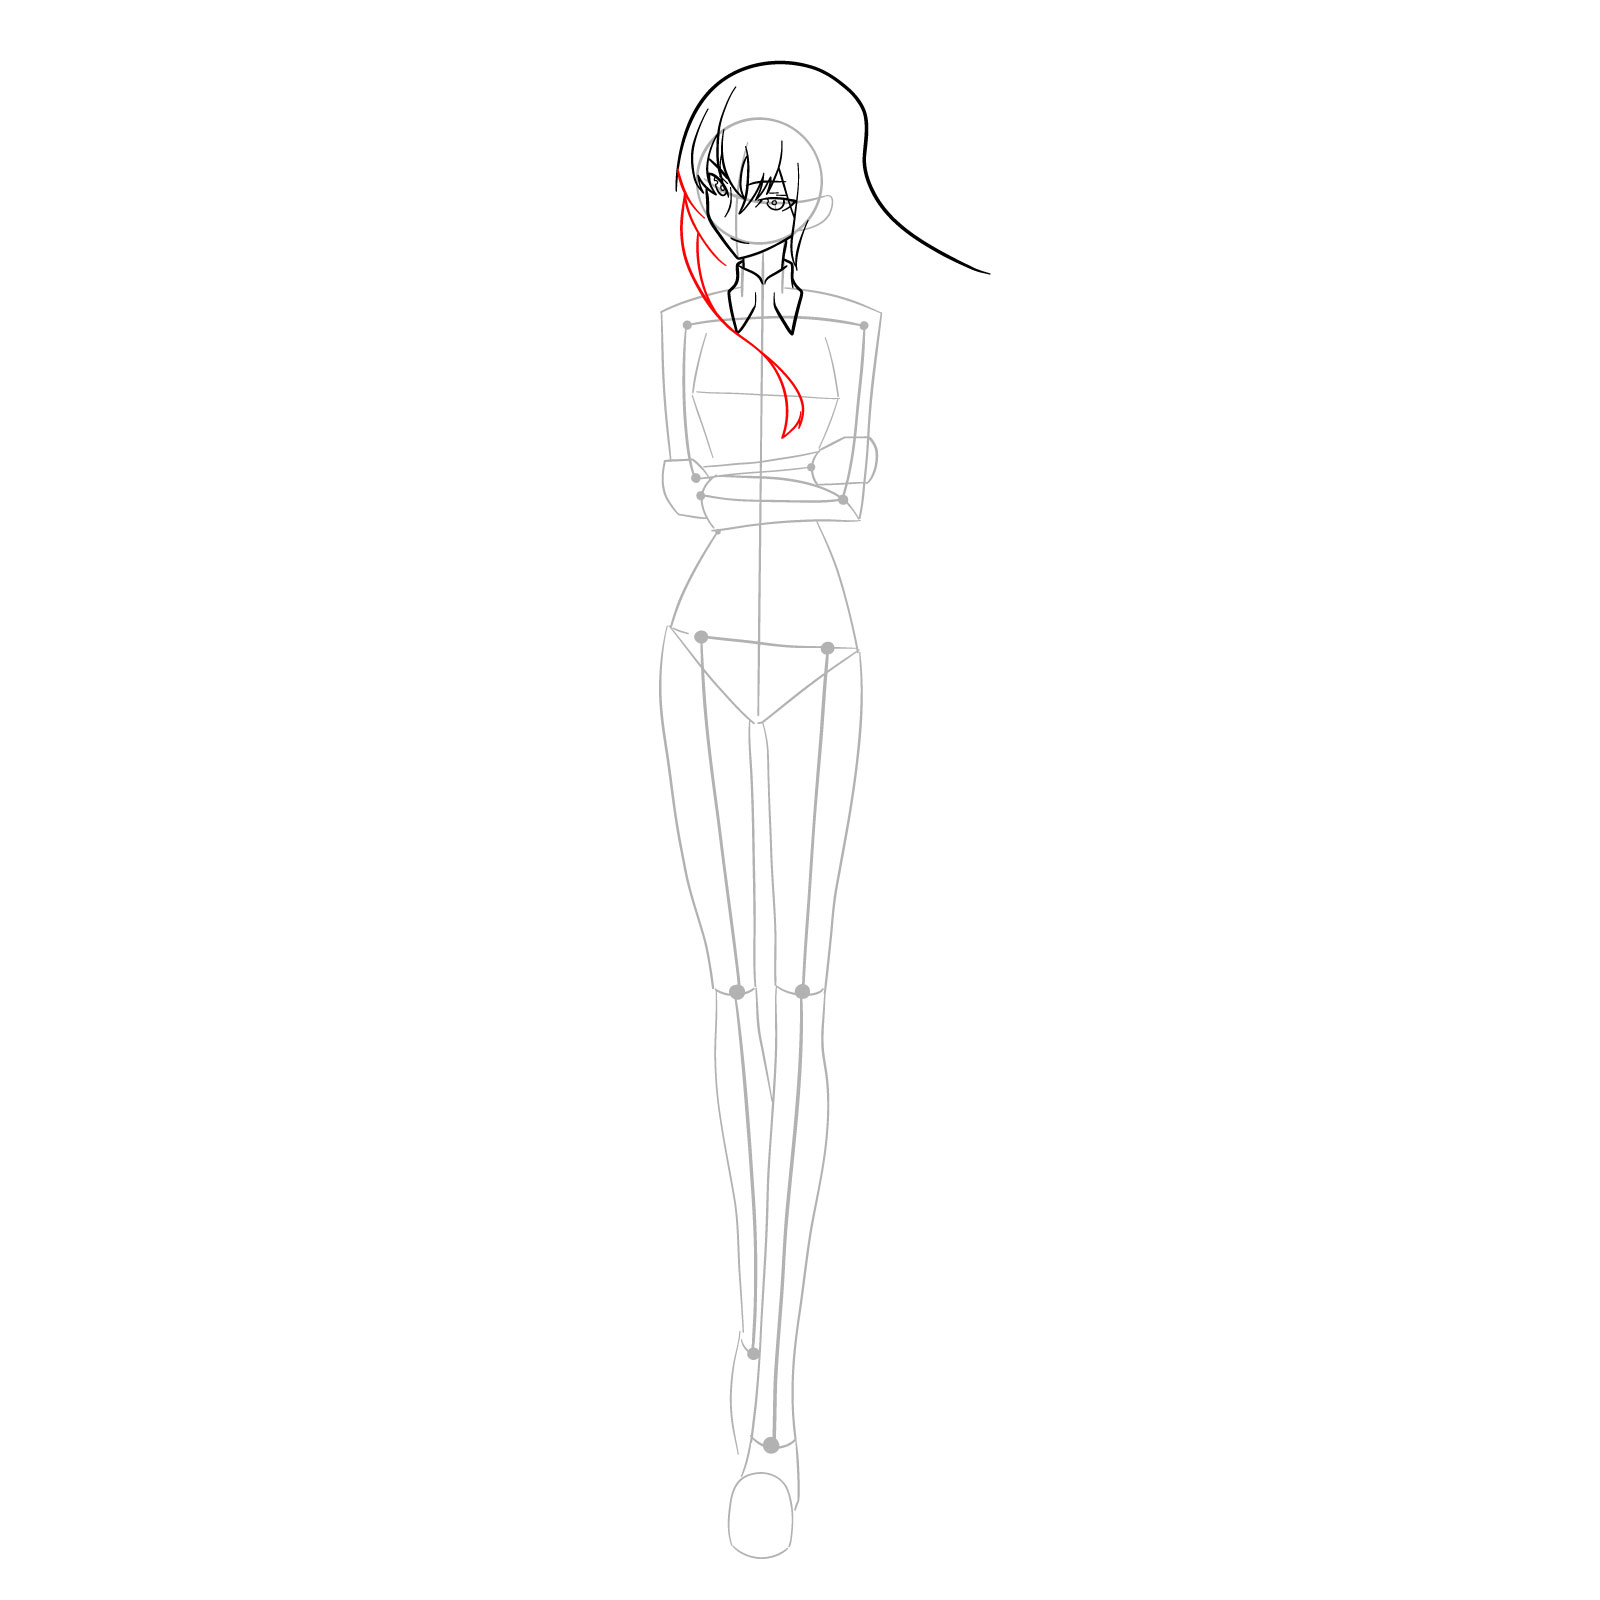 How to draw Kurisu Makise from Steins;Gate - step 13